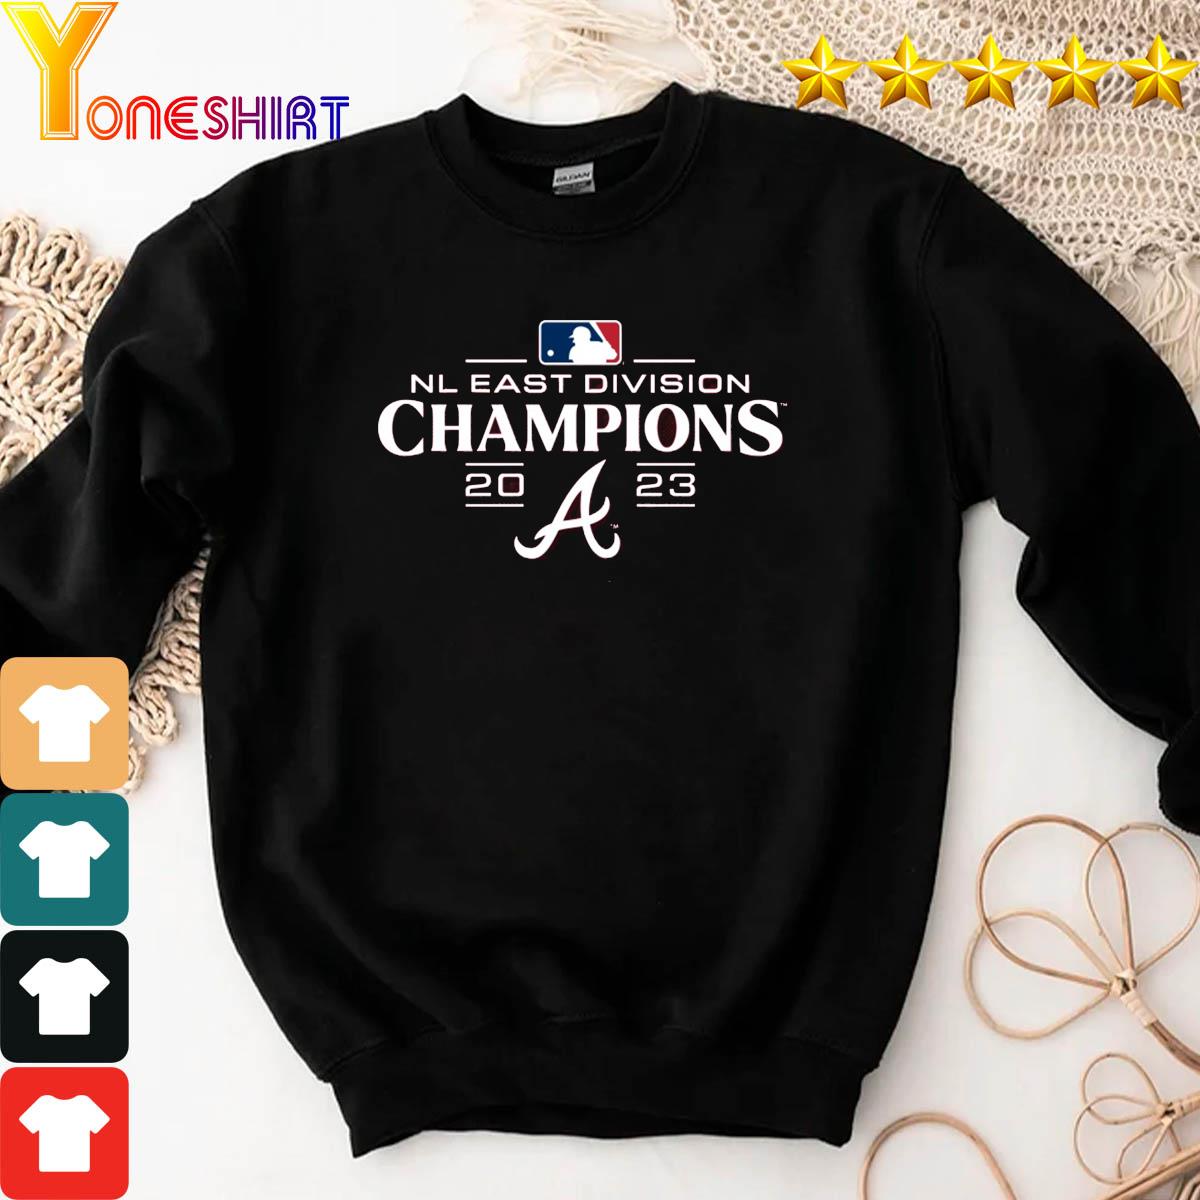 Atlanta Braves MLB 2022 NL east Division Champions shirt, hoodie, sweater,  long sleeve and tank top